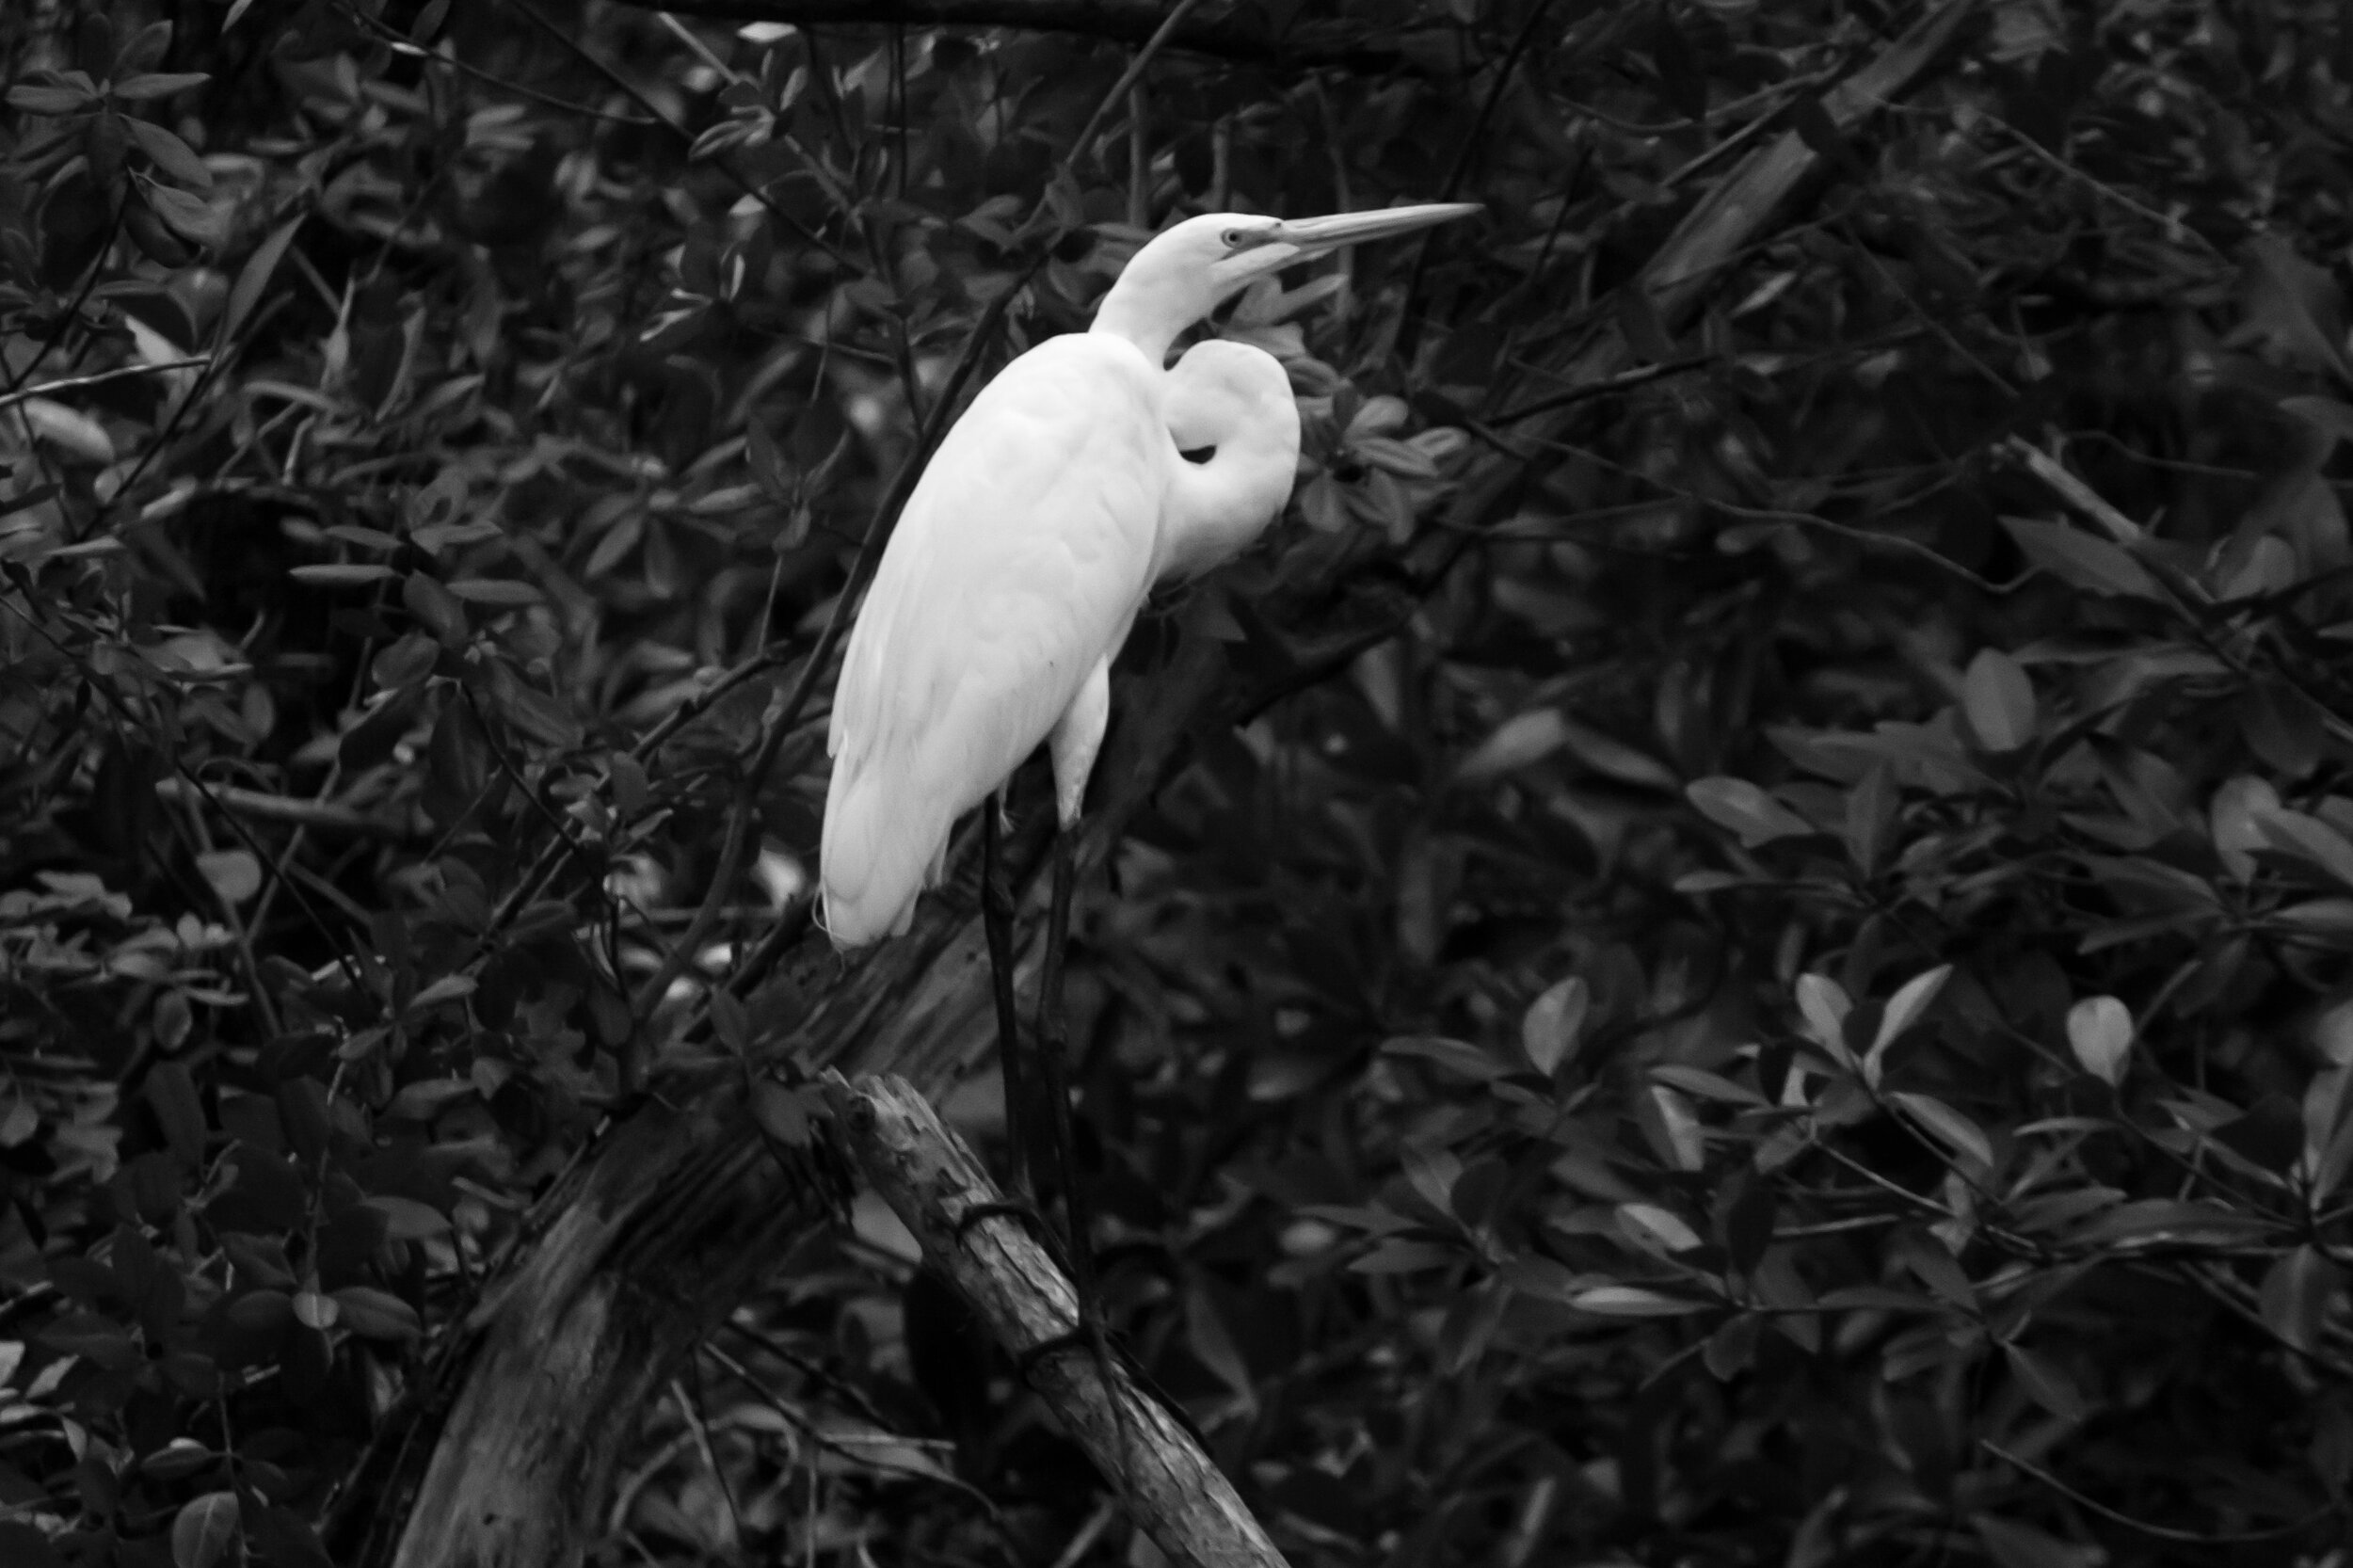 Rachel Doddridge-Spring "Egret in the Everglades" Photo $300